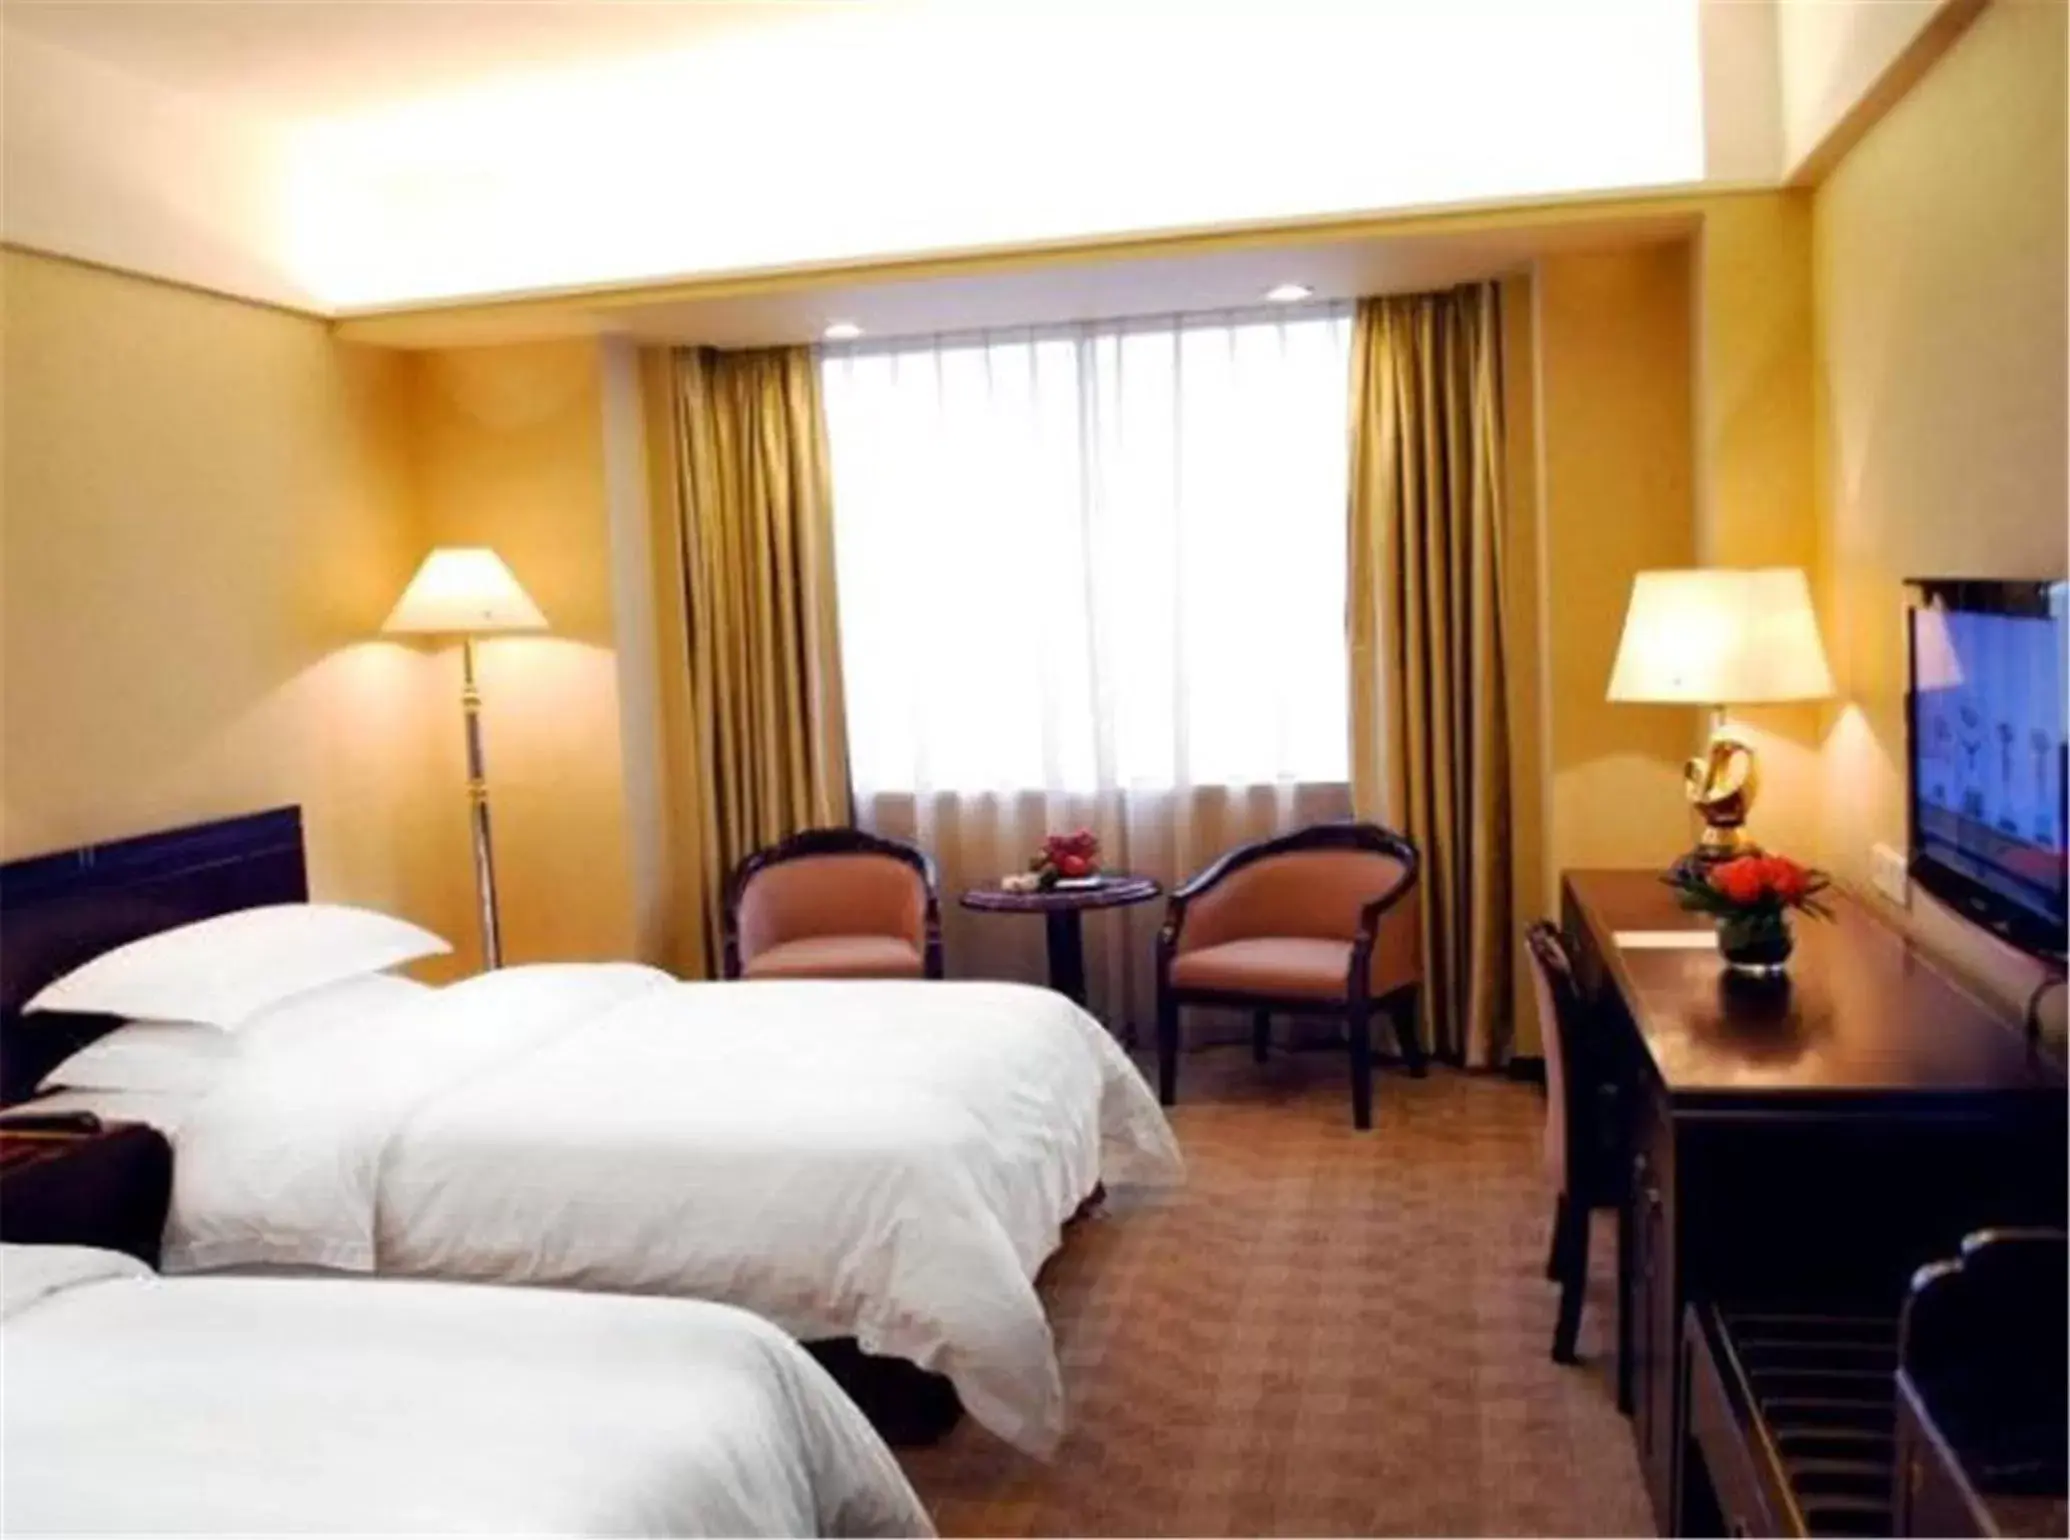 Bedroom in Zhongshan International Hotel